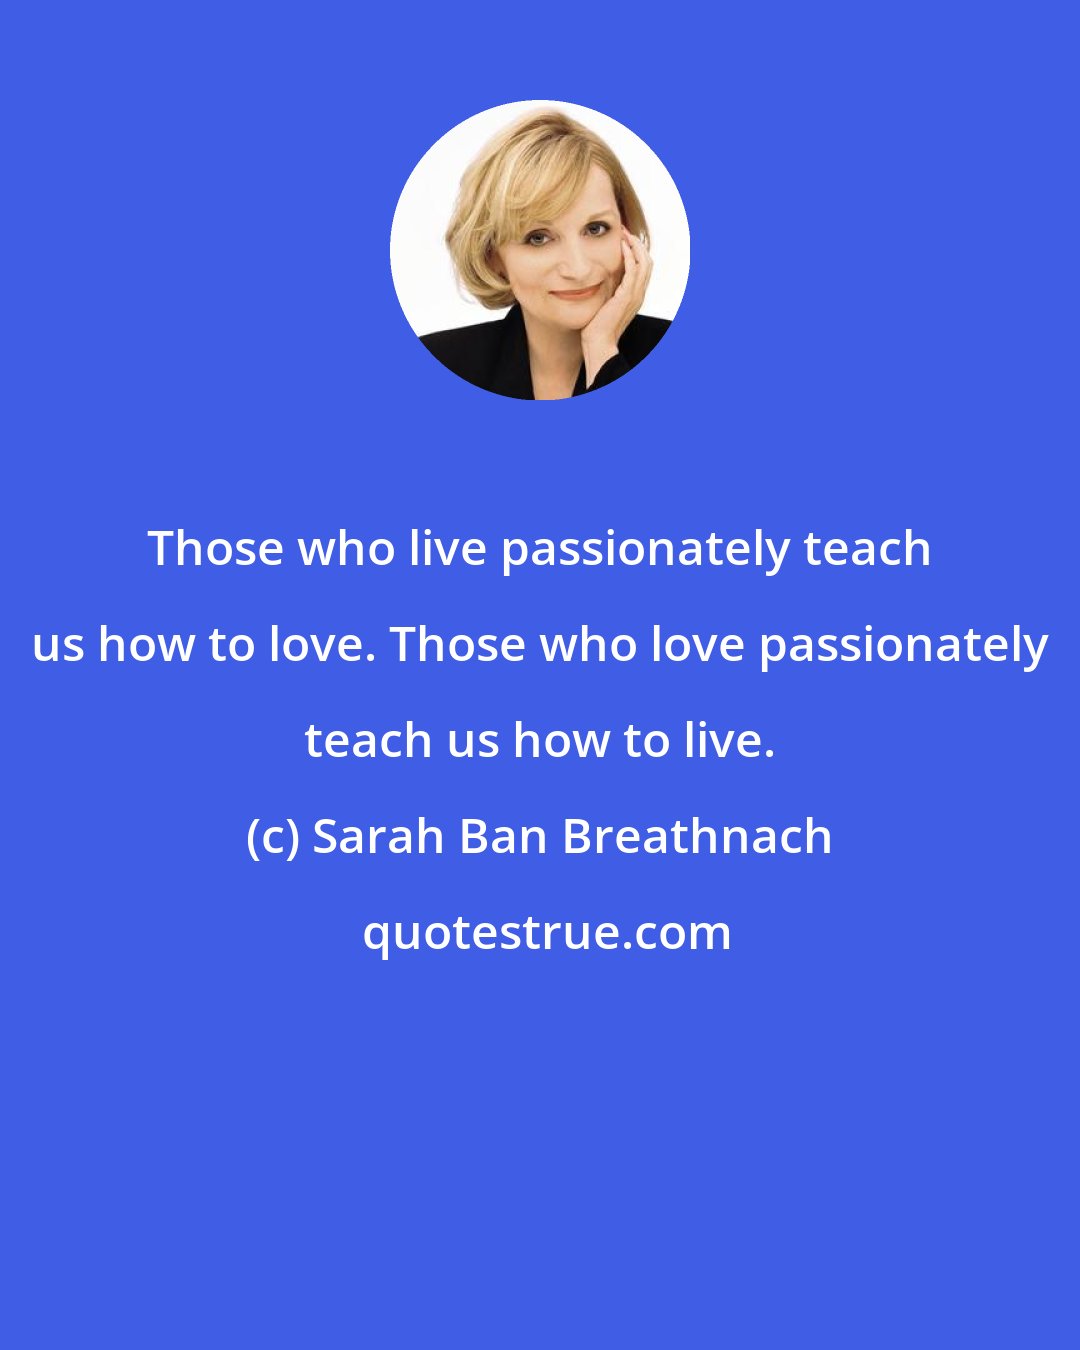 Sarah Ban Breathnach: Those who live passionately teach us how to love. Those who love passionately teach us how to live.